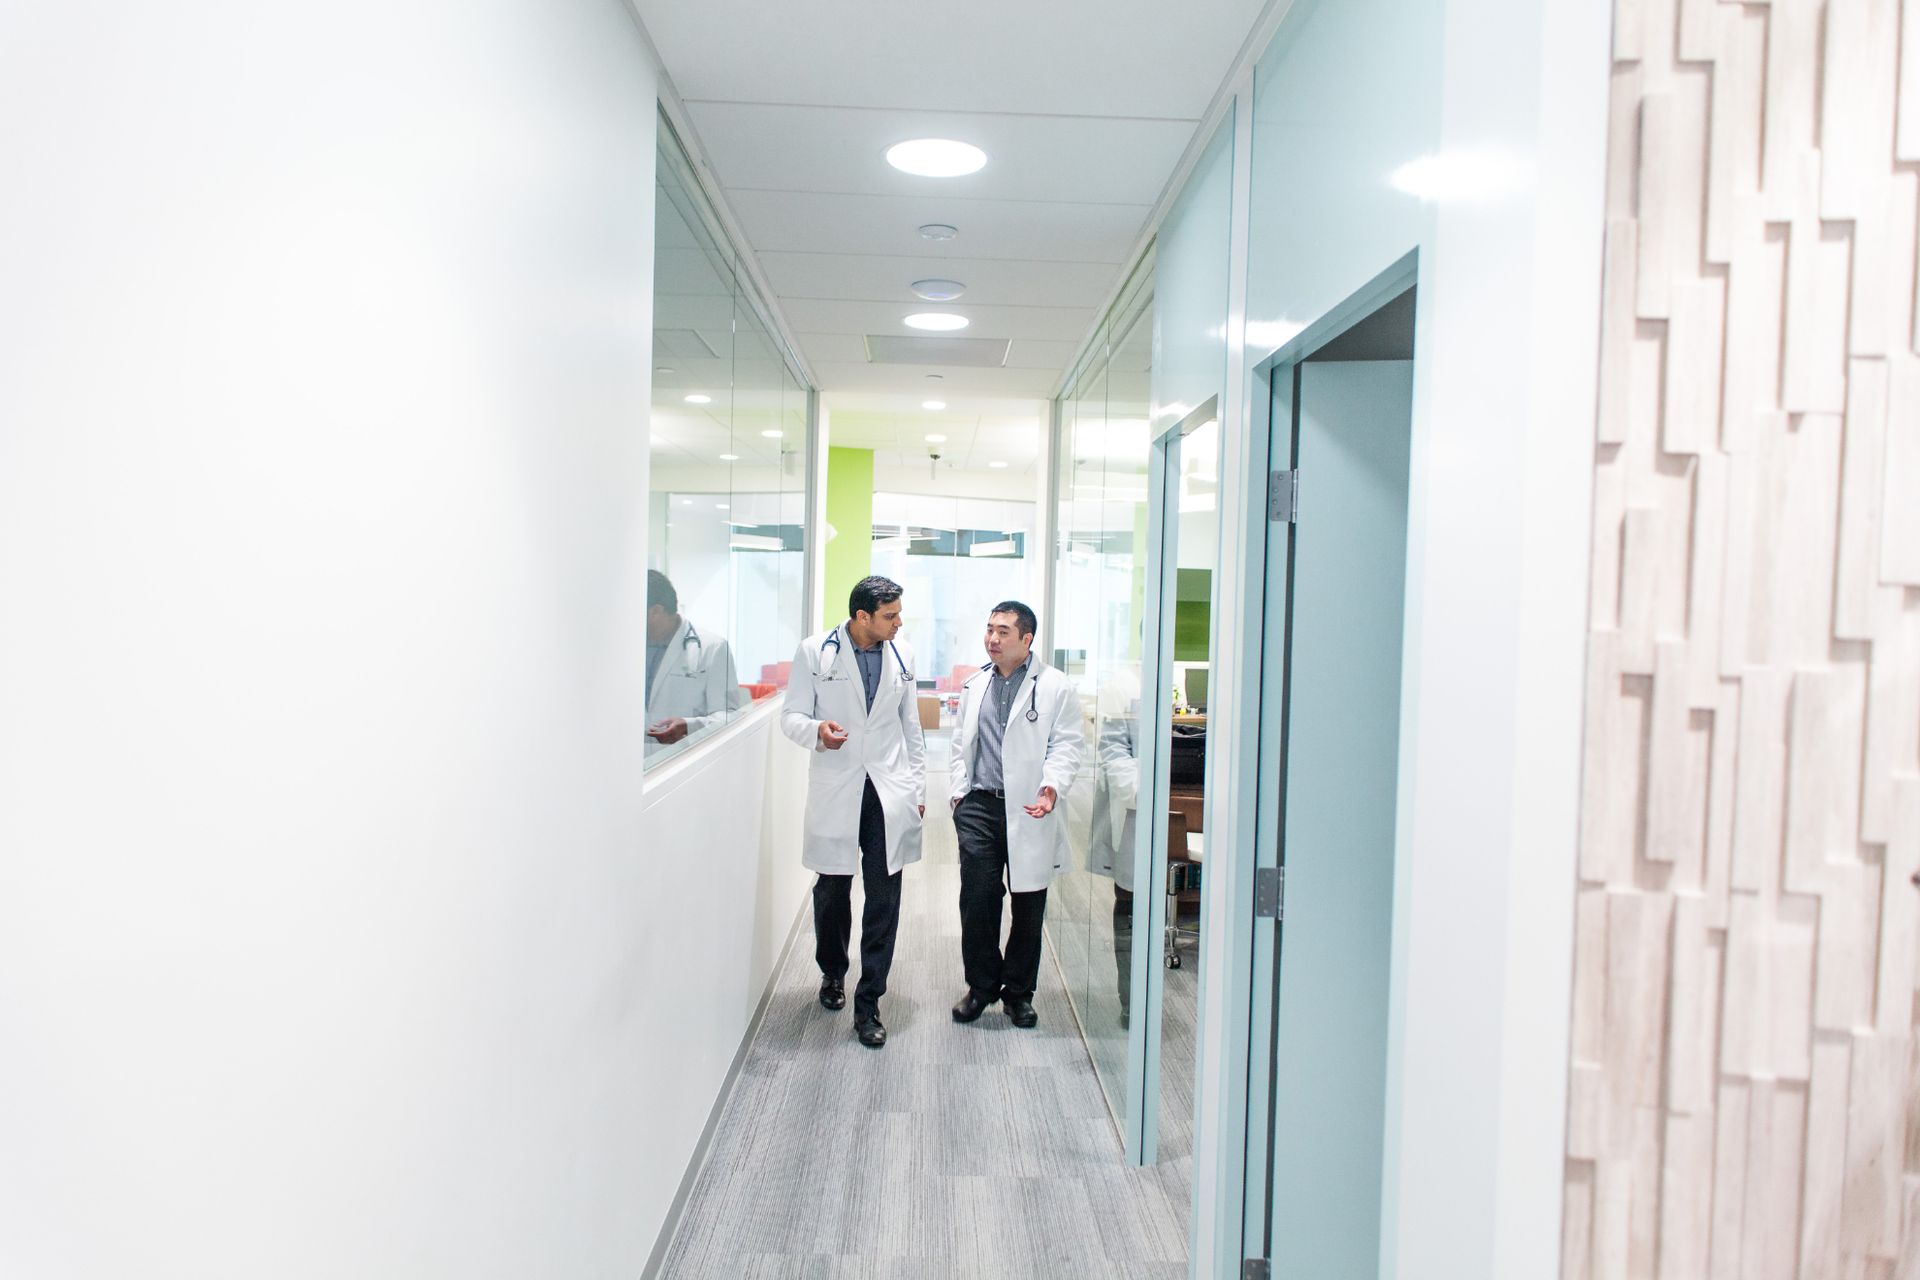 Attune Health providers Dr. Venturupalli and Bryant Uy walking down hallway